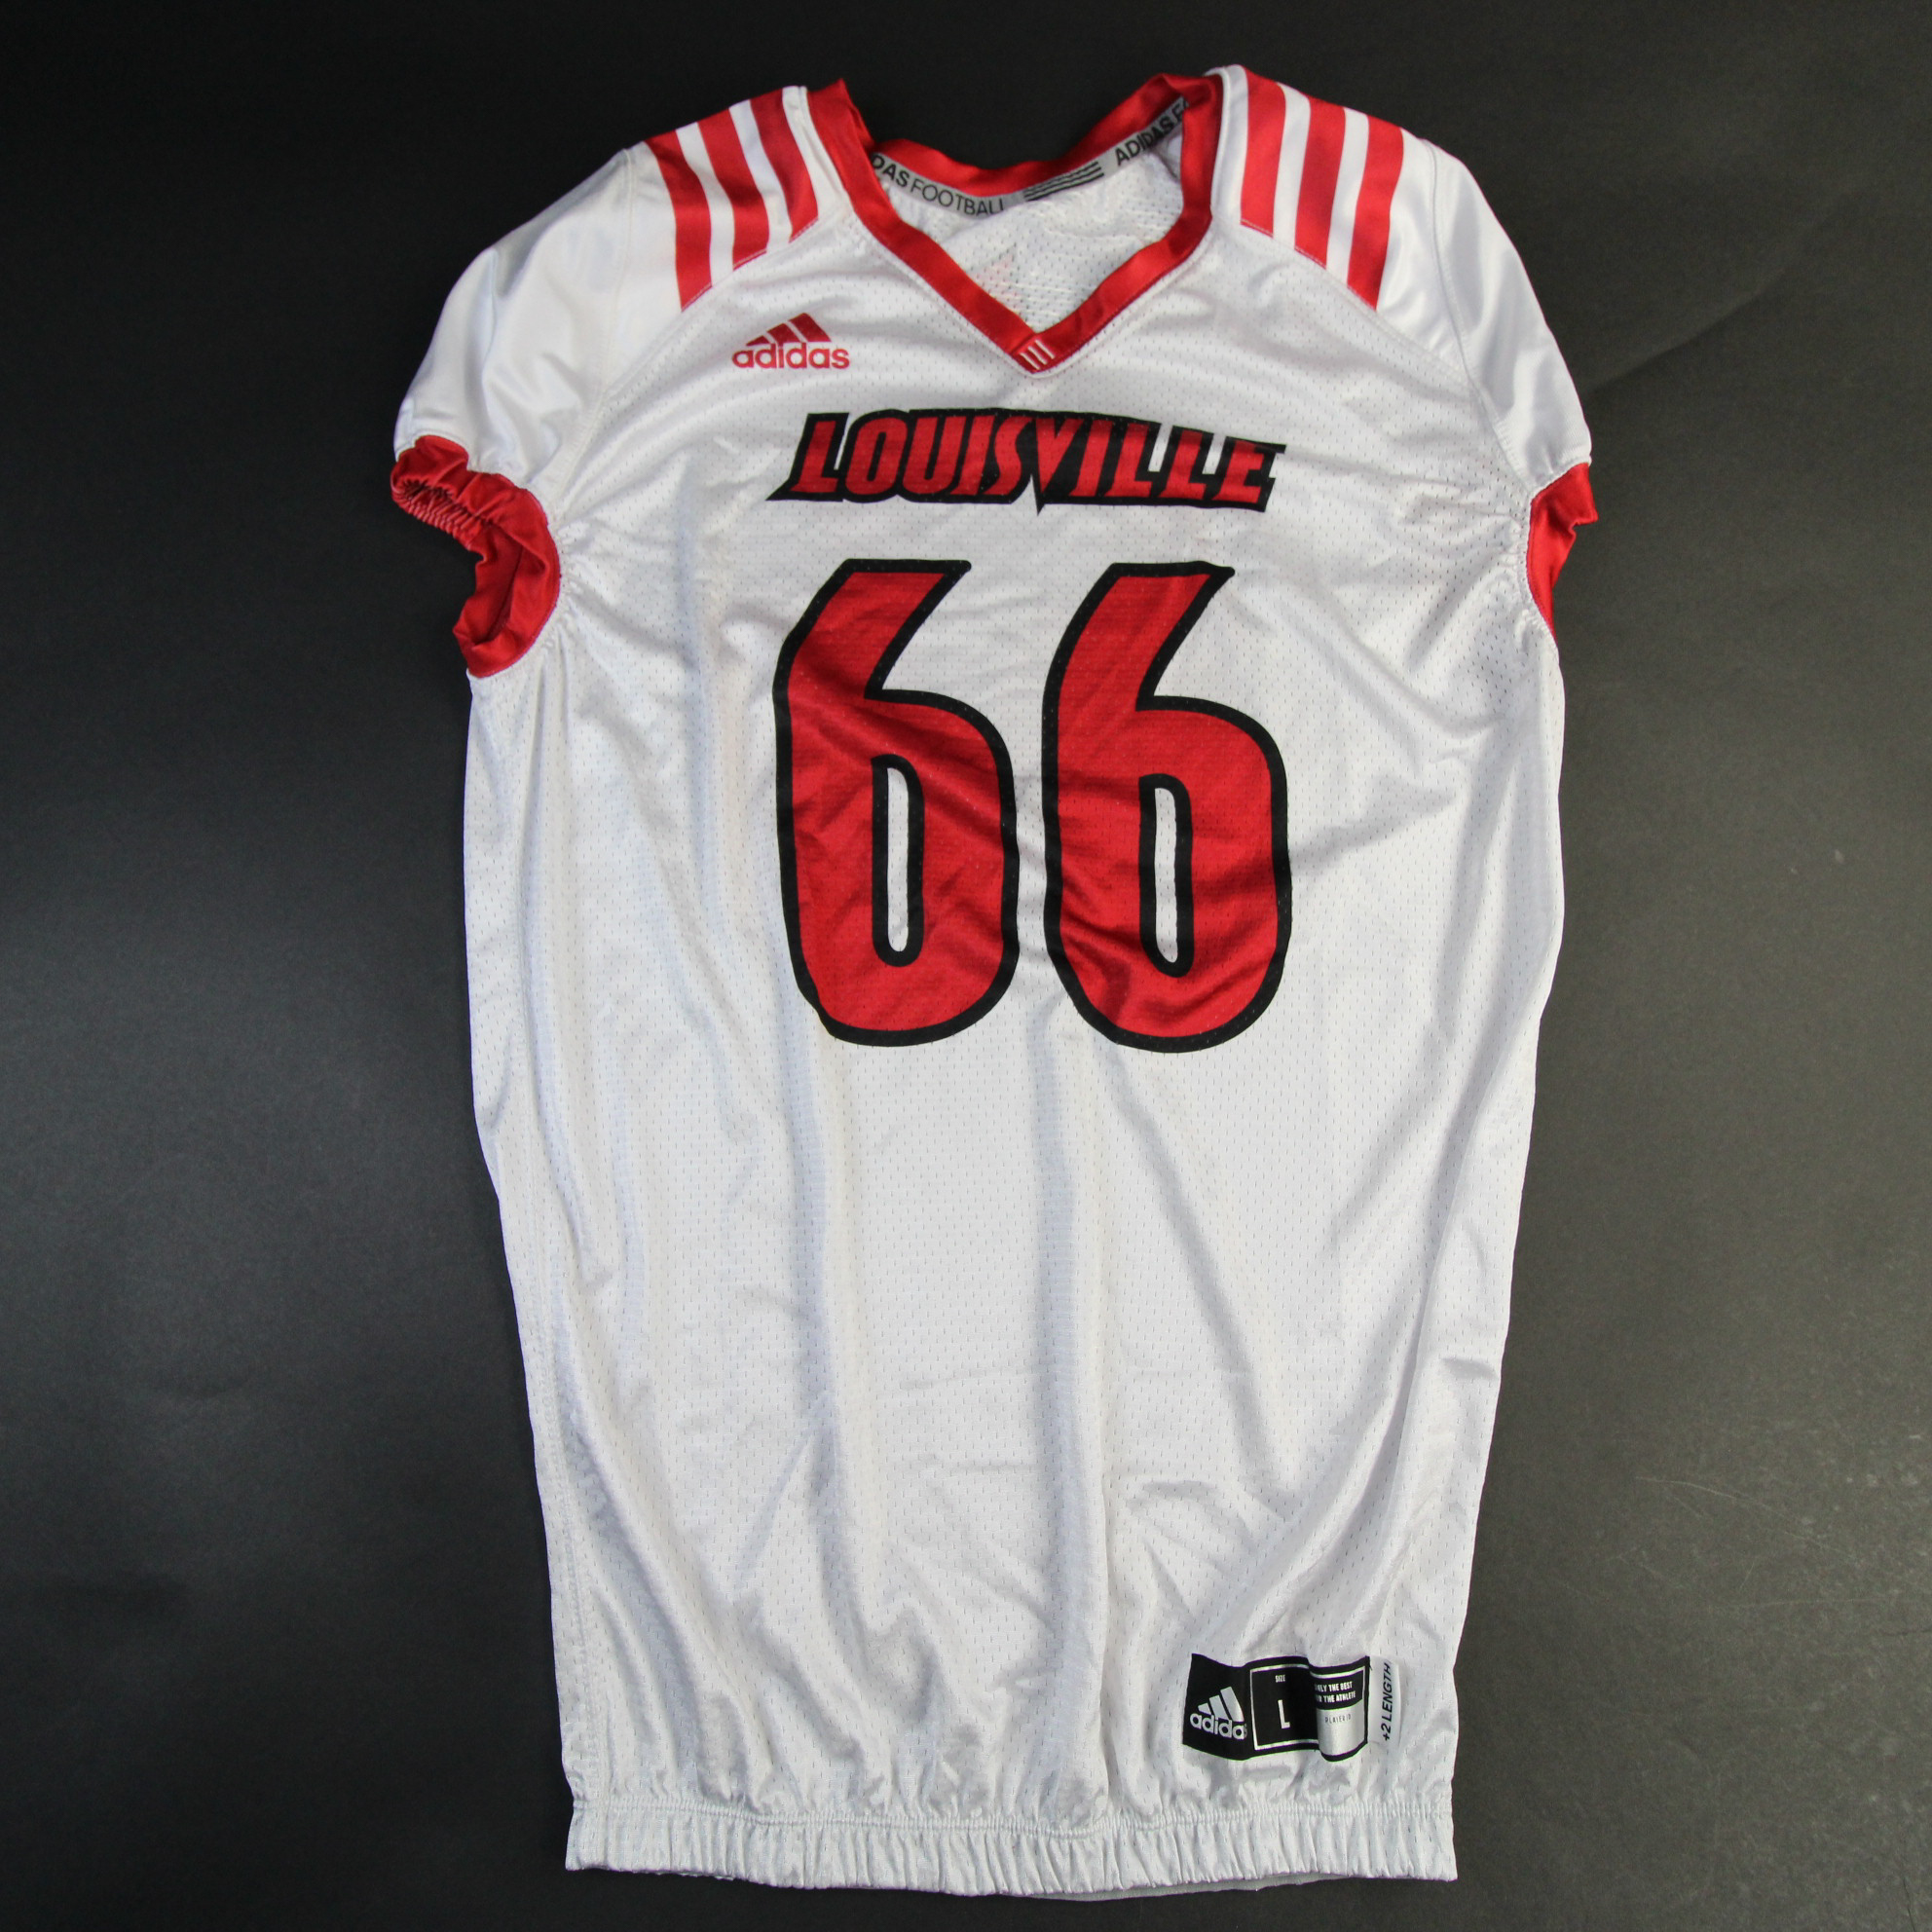 Louisville Cardinals adidas Practice Jersey - Football Men's New